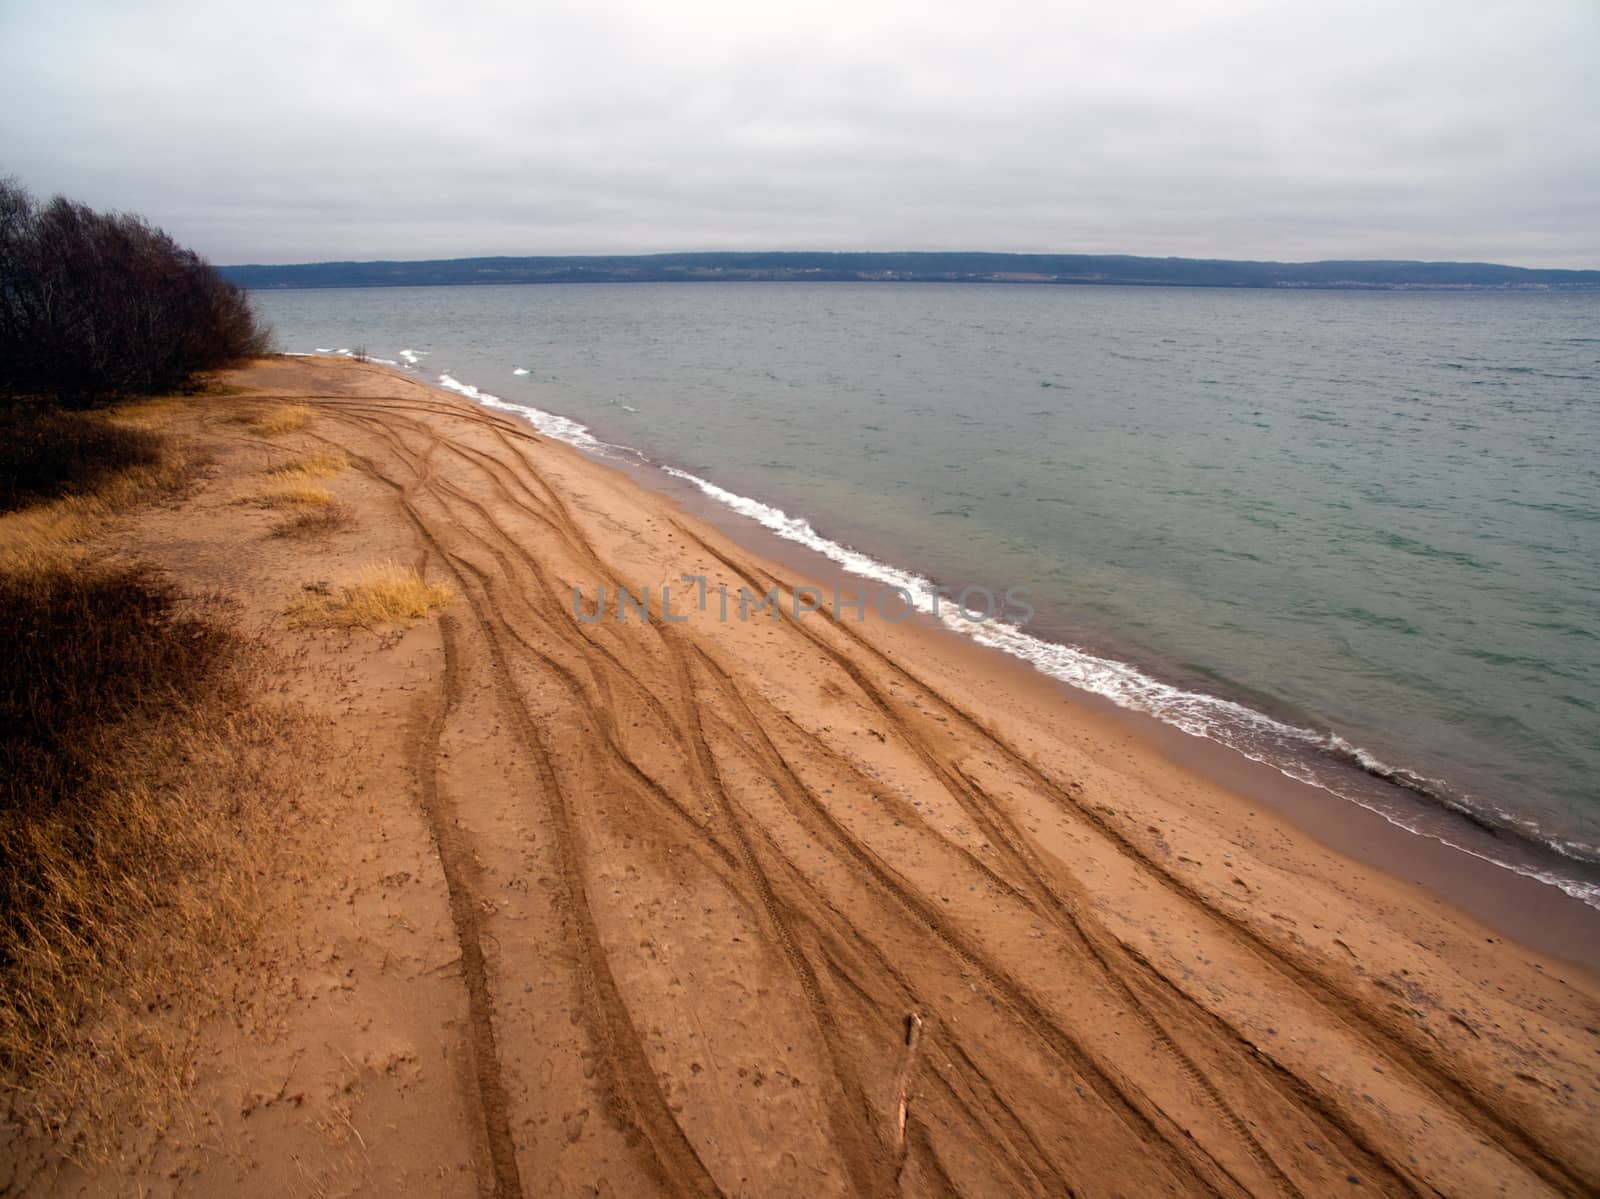 Sandy beach with dirt bike tracks